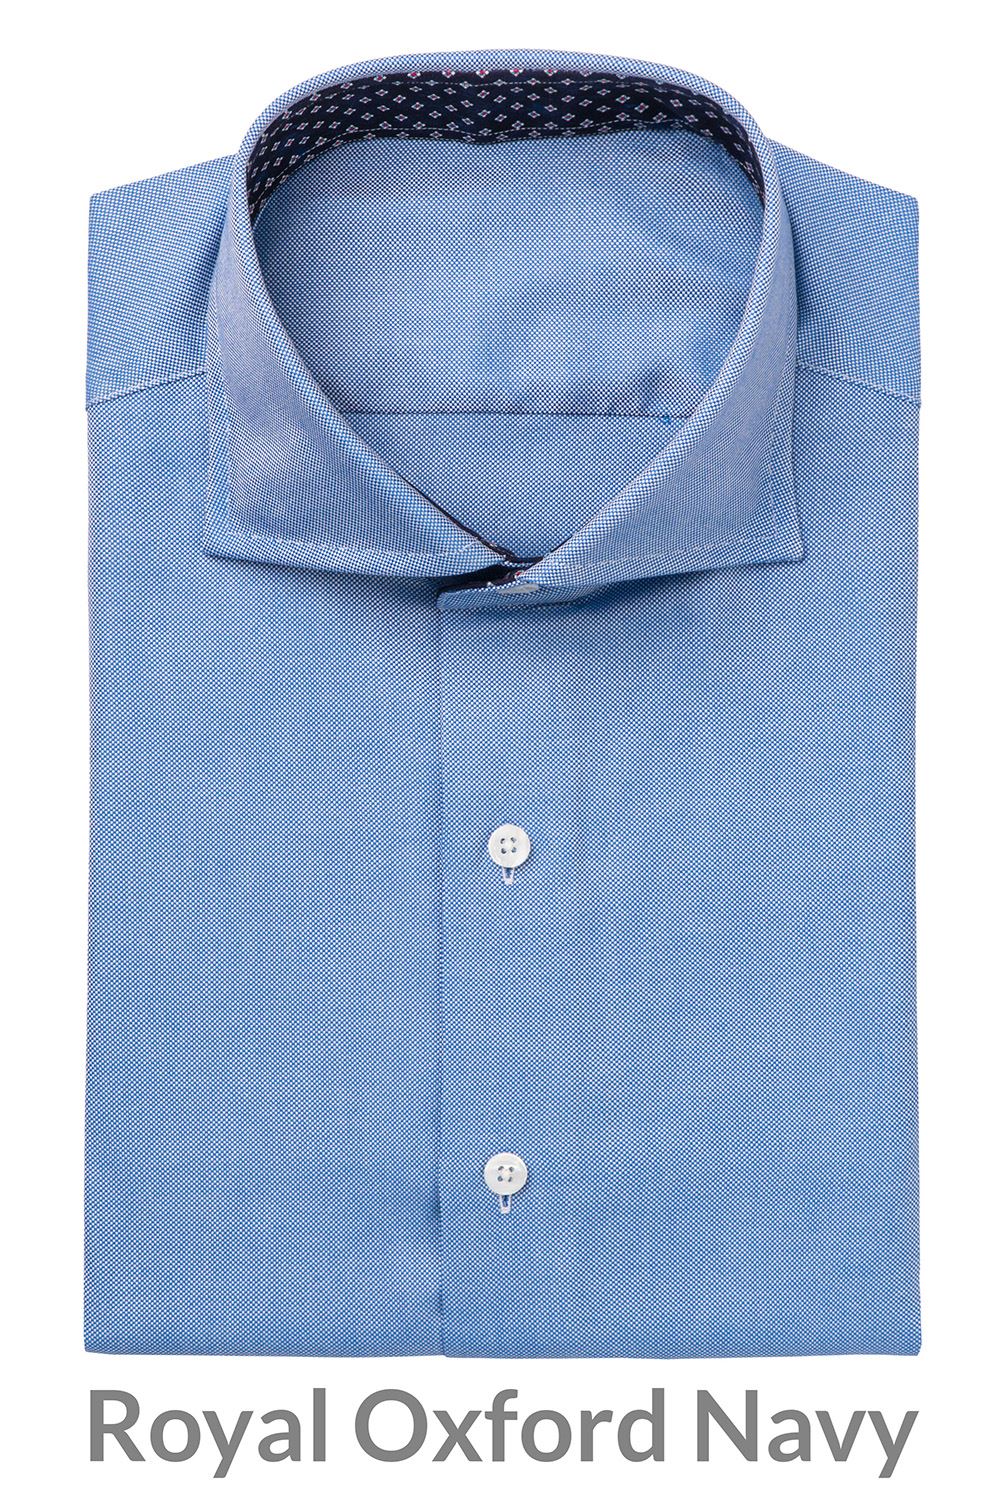 SFI3085 – Medium Weight, Blue/White,Royal Oxford Weave, Soft Finish